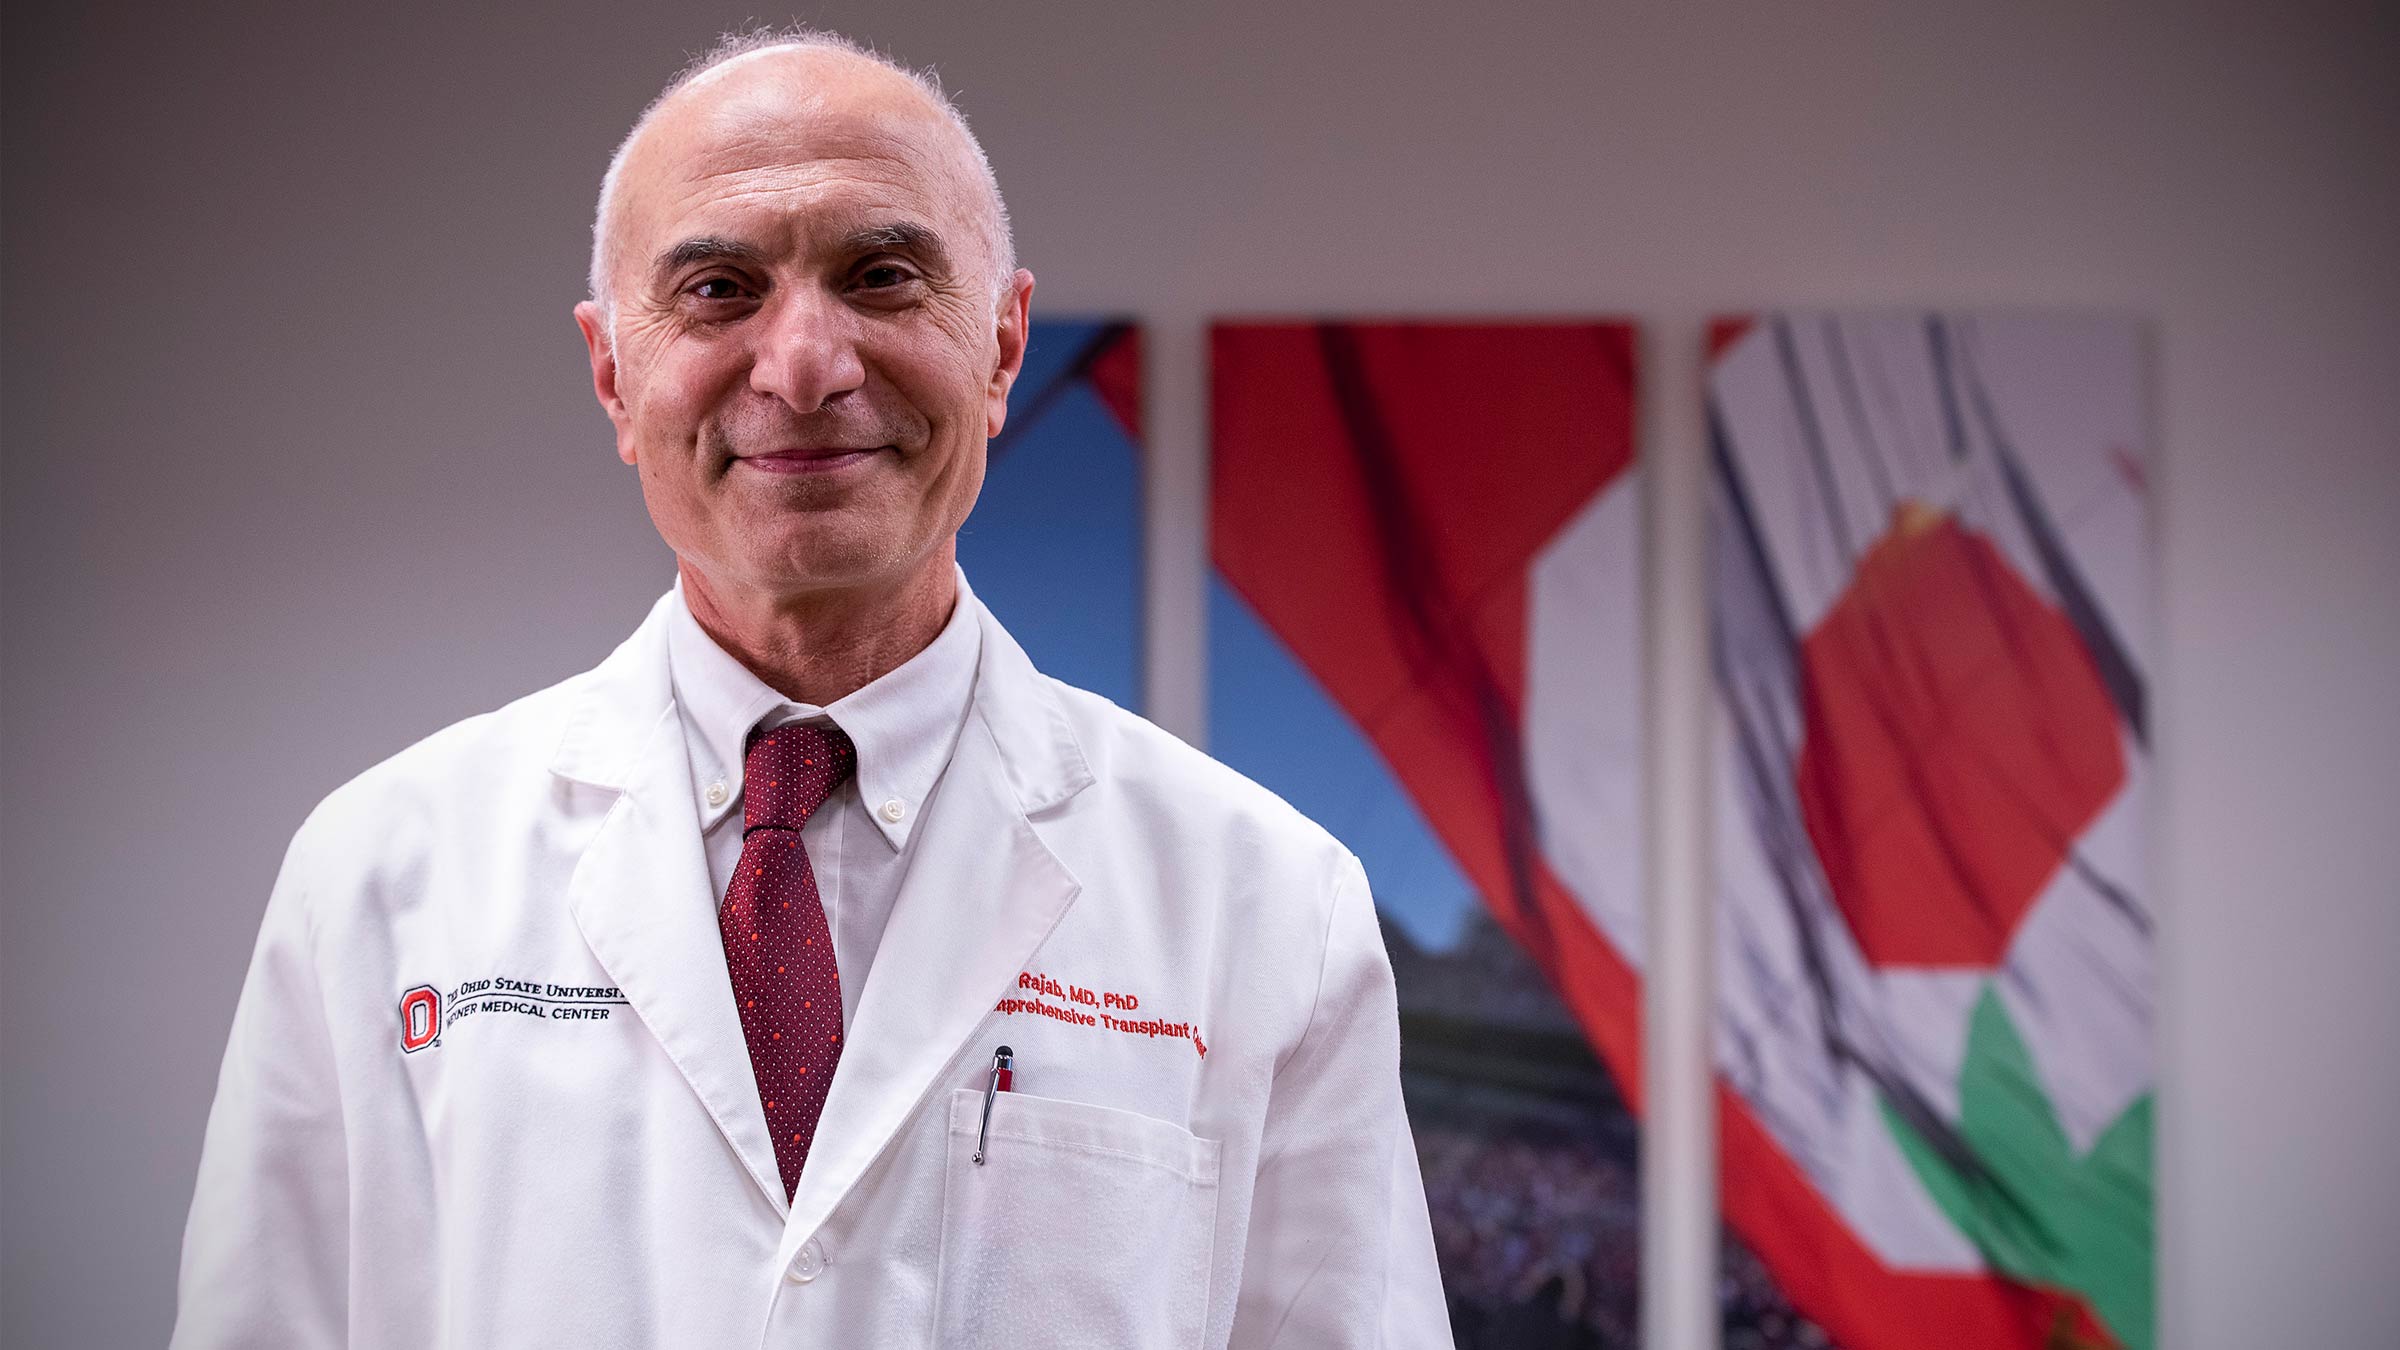 Ohio State transplant surgeon, Amer Rajab, MD, PhD